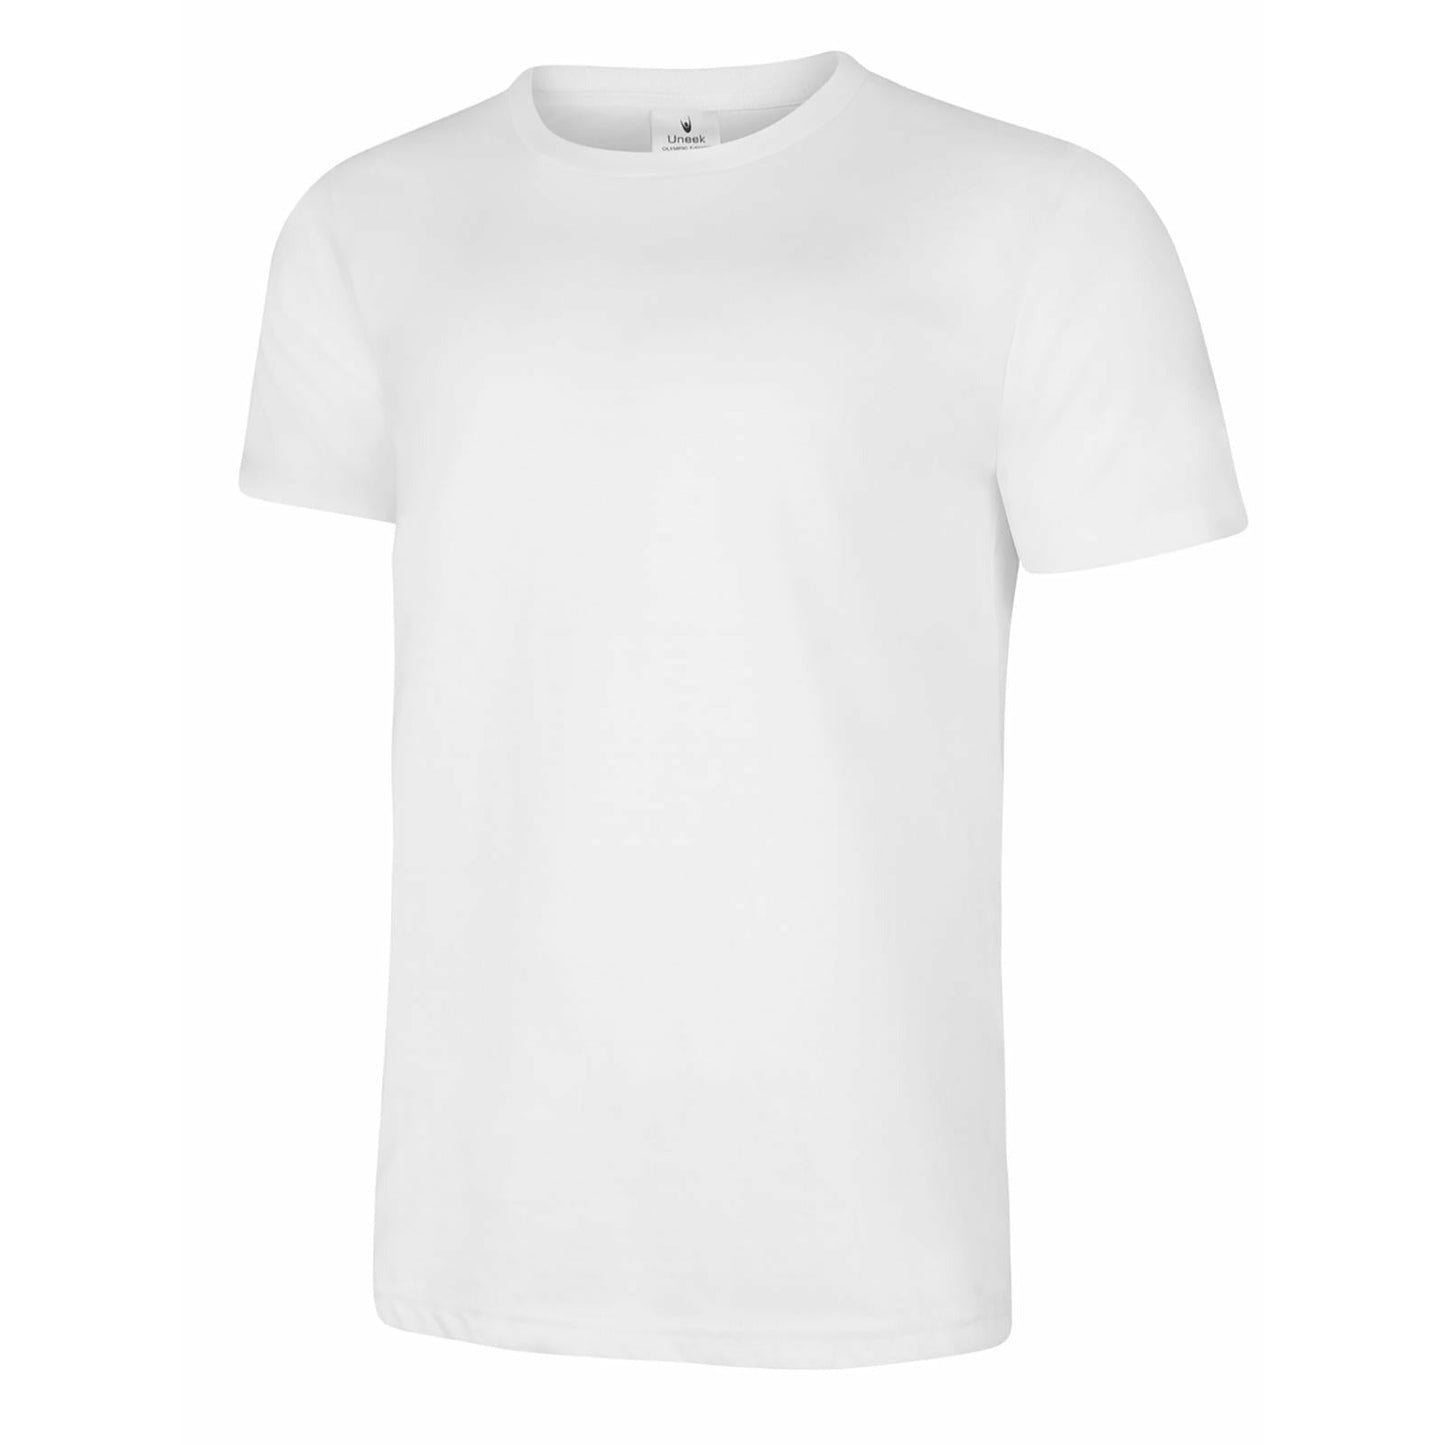 Olympic T-shirt - White